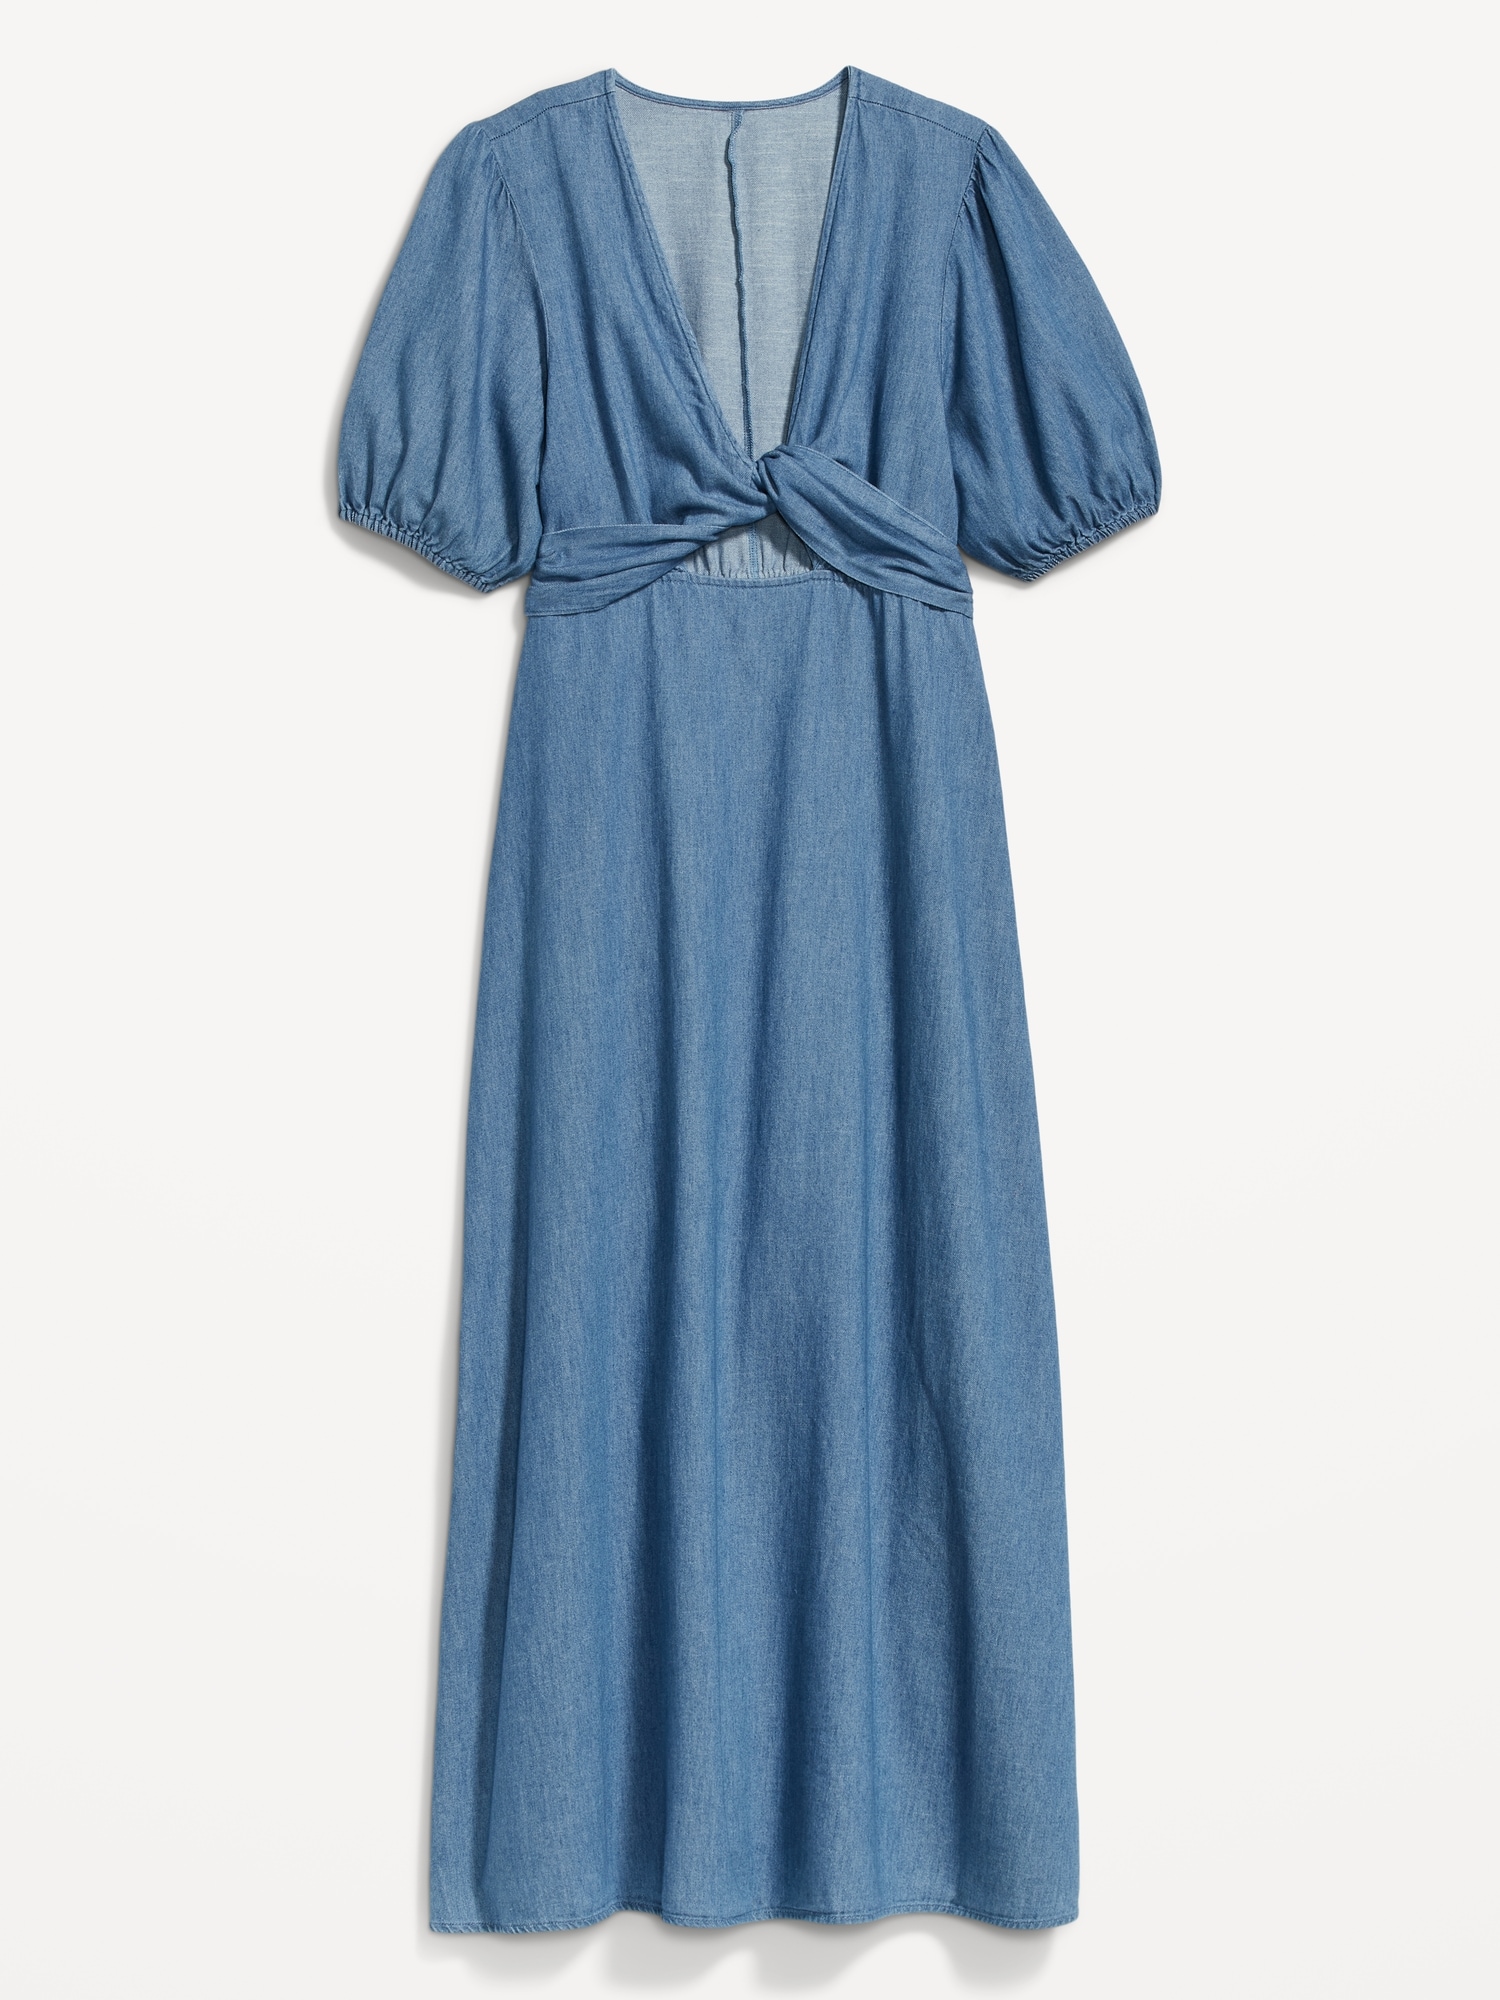 Dresses  Oasis Womens Twist Front Bias Cut Maxi Dress Navy ~ Isphingo